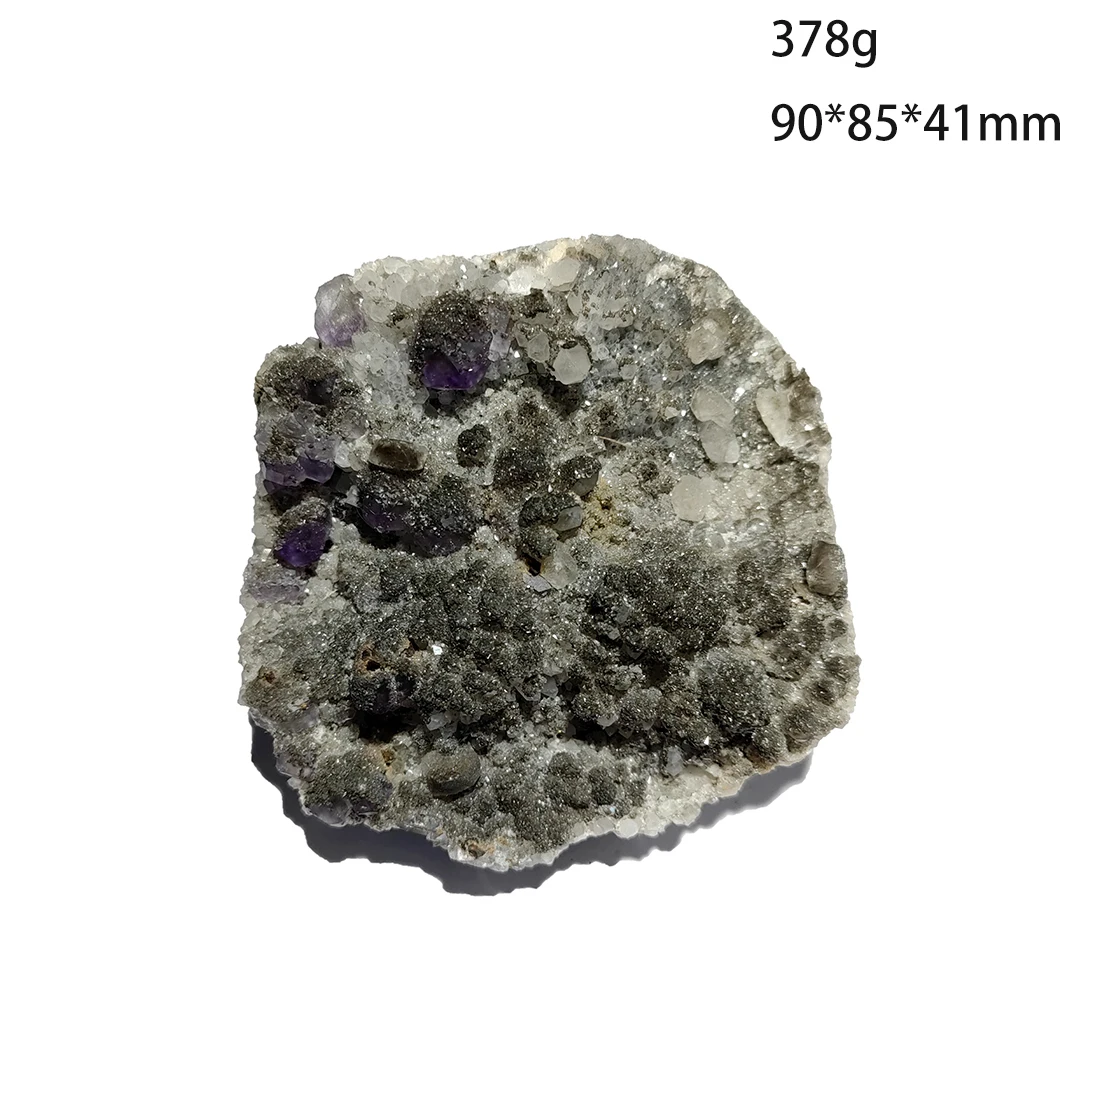 

C0-7D Natural Calcite Fluorite Quartz Mineral Crystal Specimen From Fujian PROVINCE CHINA